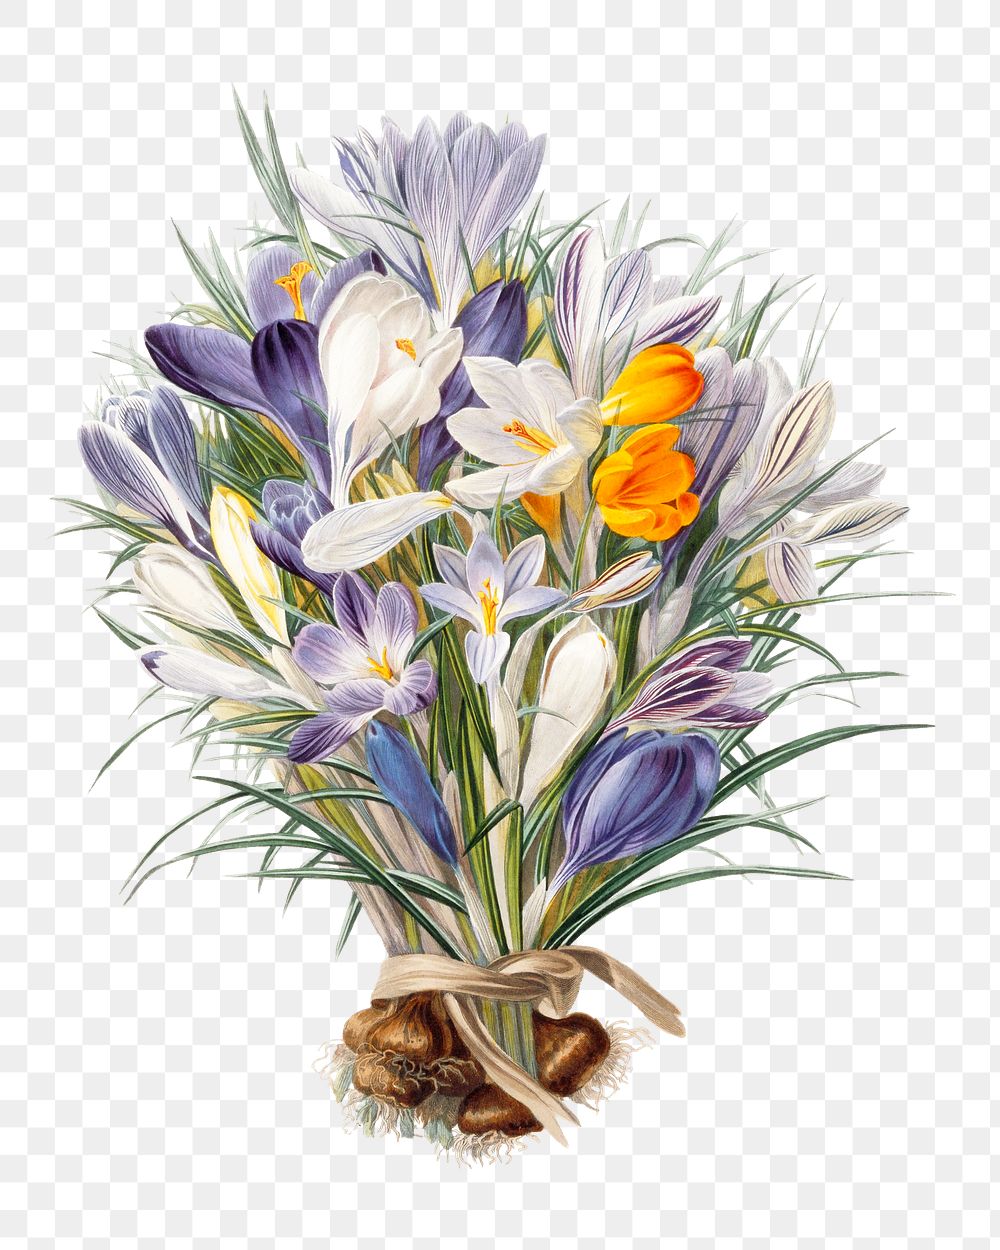 PNG Spring Crocuses, vintage flower illustration by Charles John Robertson, transparent background. Remixed by rawpixel.